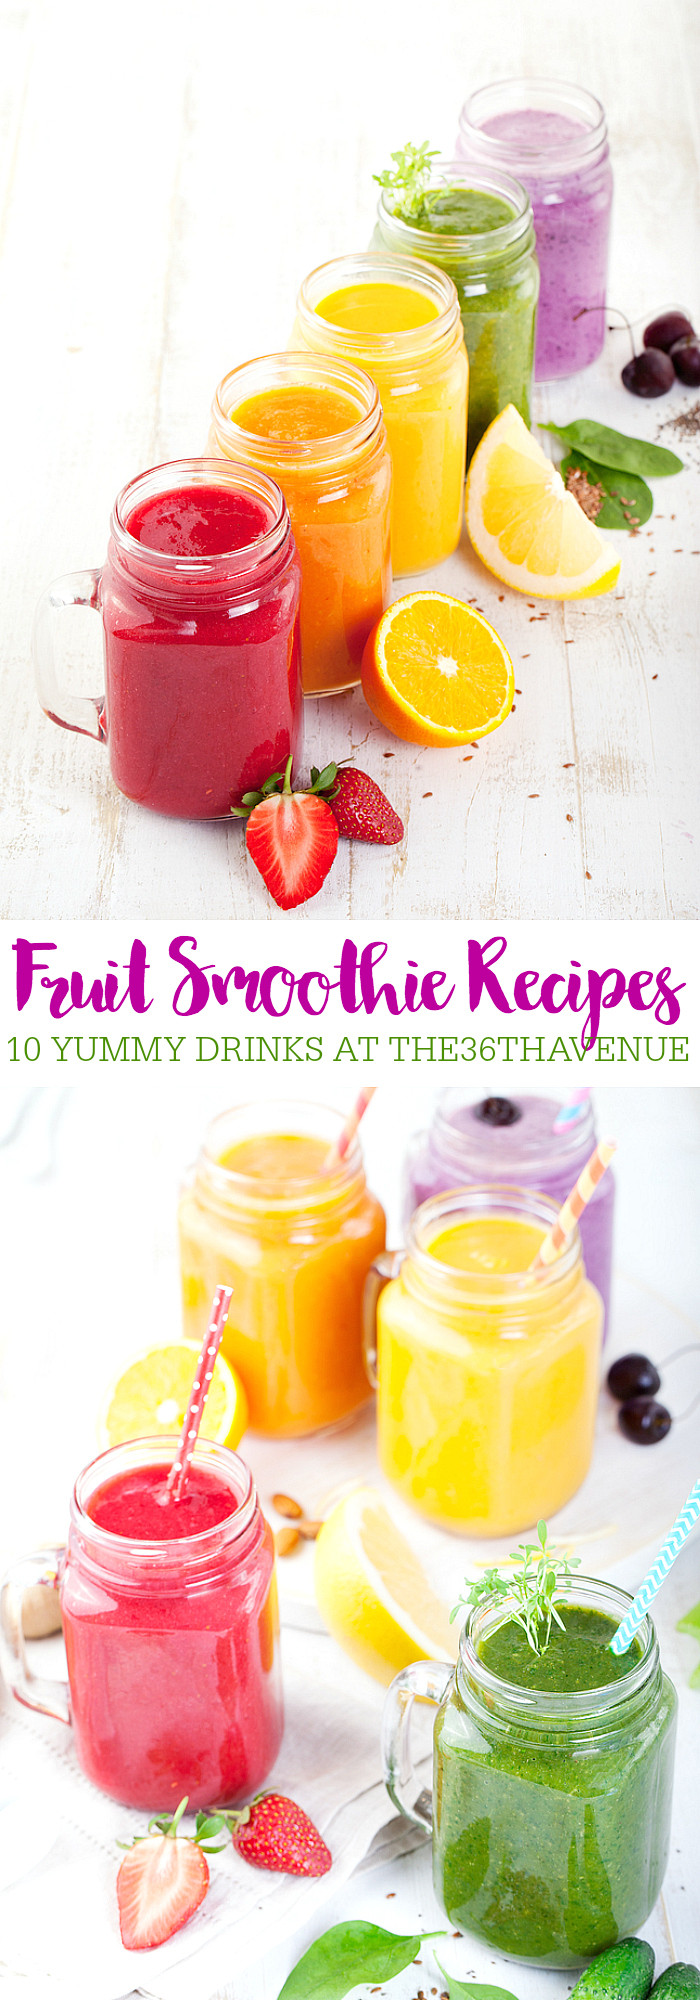 Fresh Fruit Smoothies Recipe
 Smoothie Recipes Fresh Fruit Drinks The 36th AVENUE